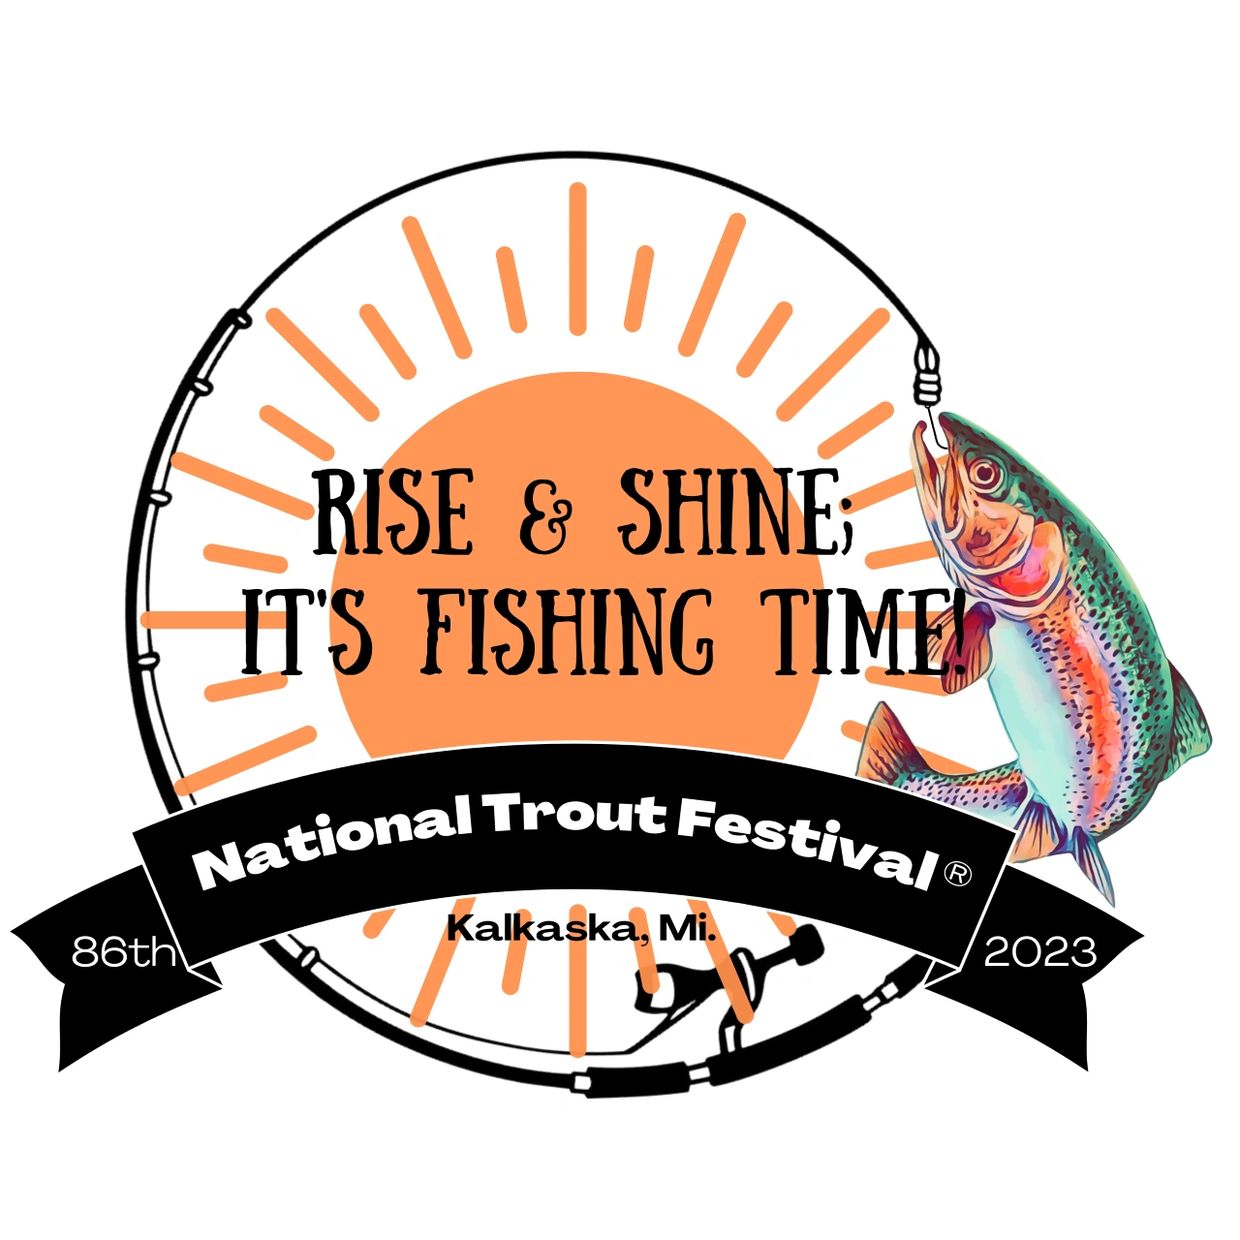 National Trout Festival Festival Kalkaska, Michigan